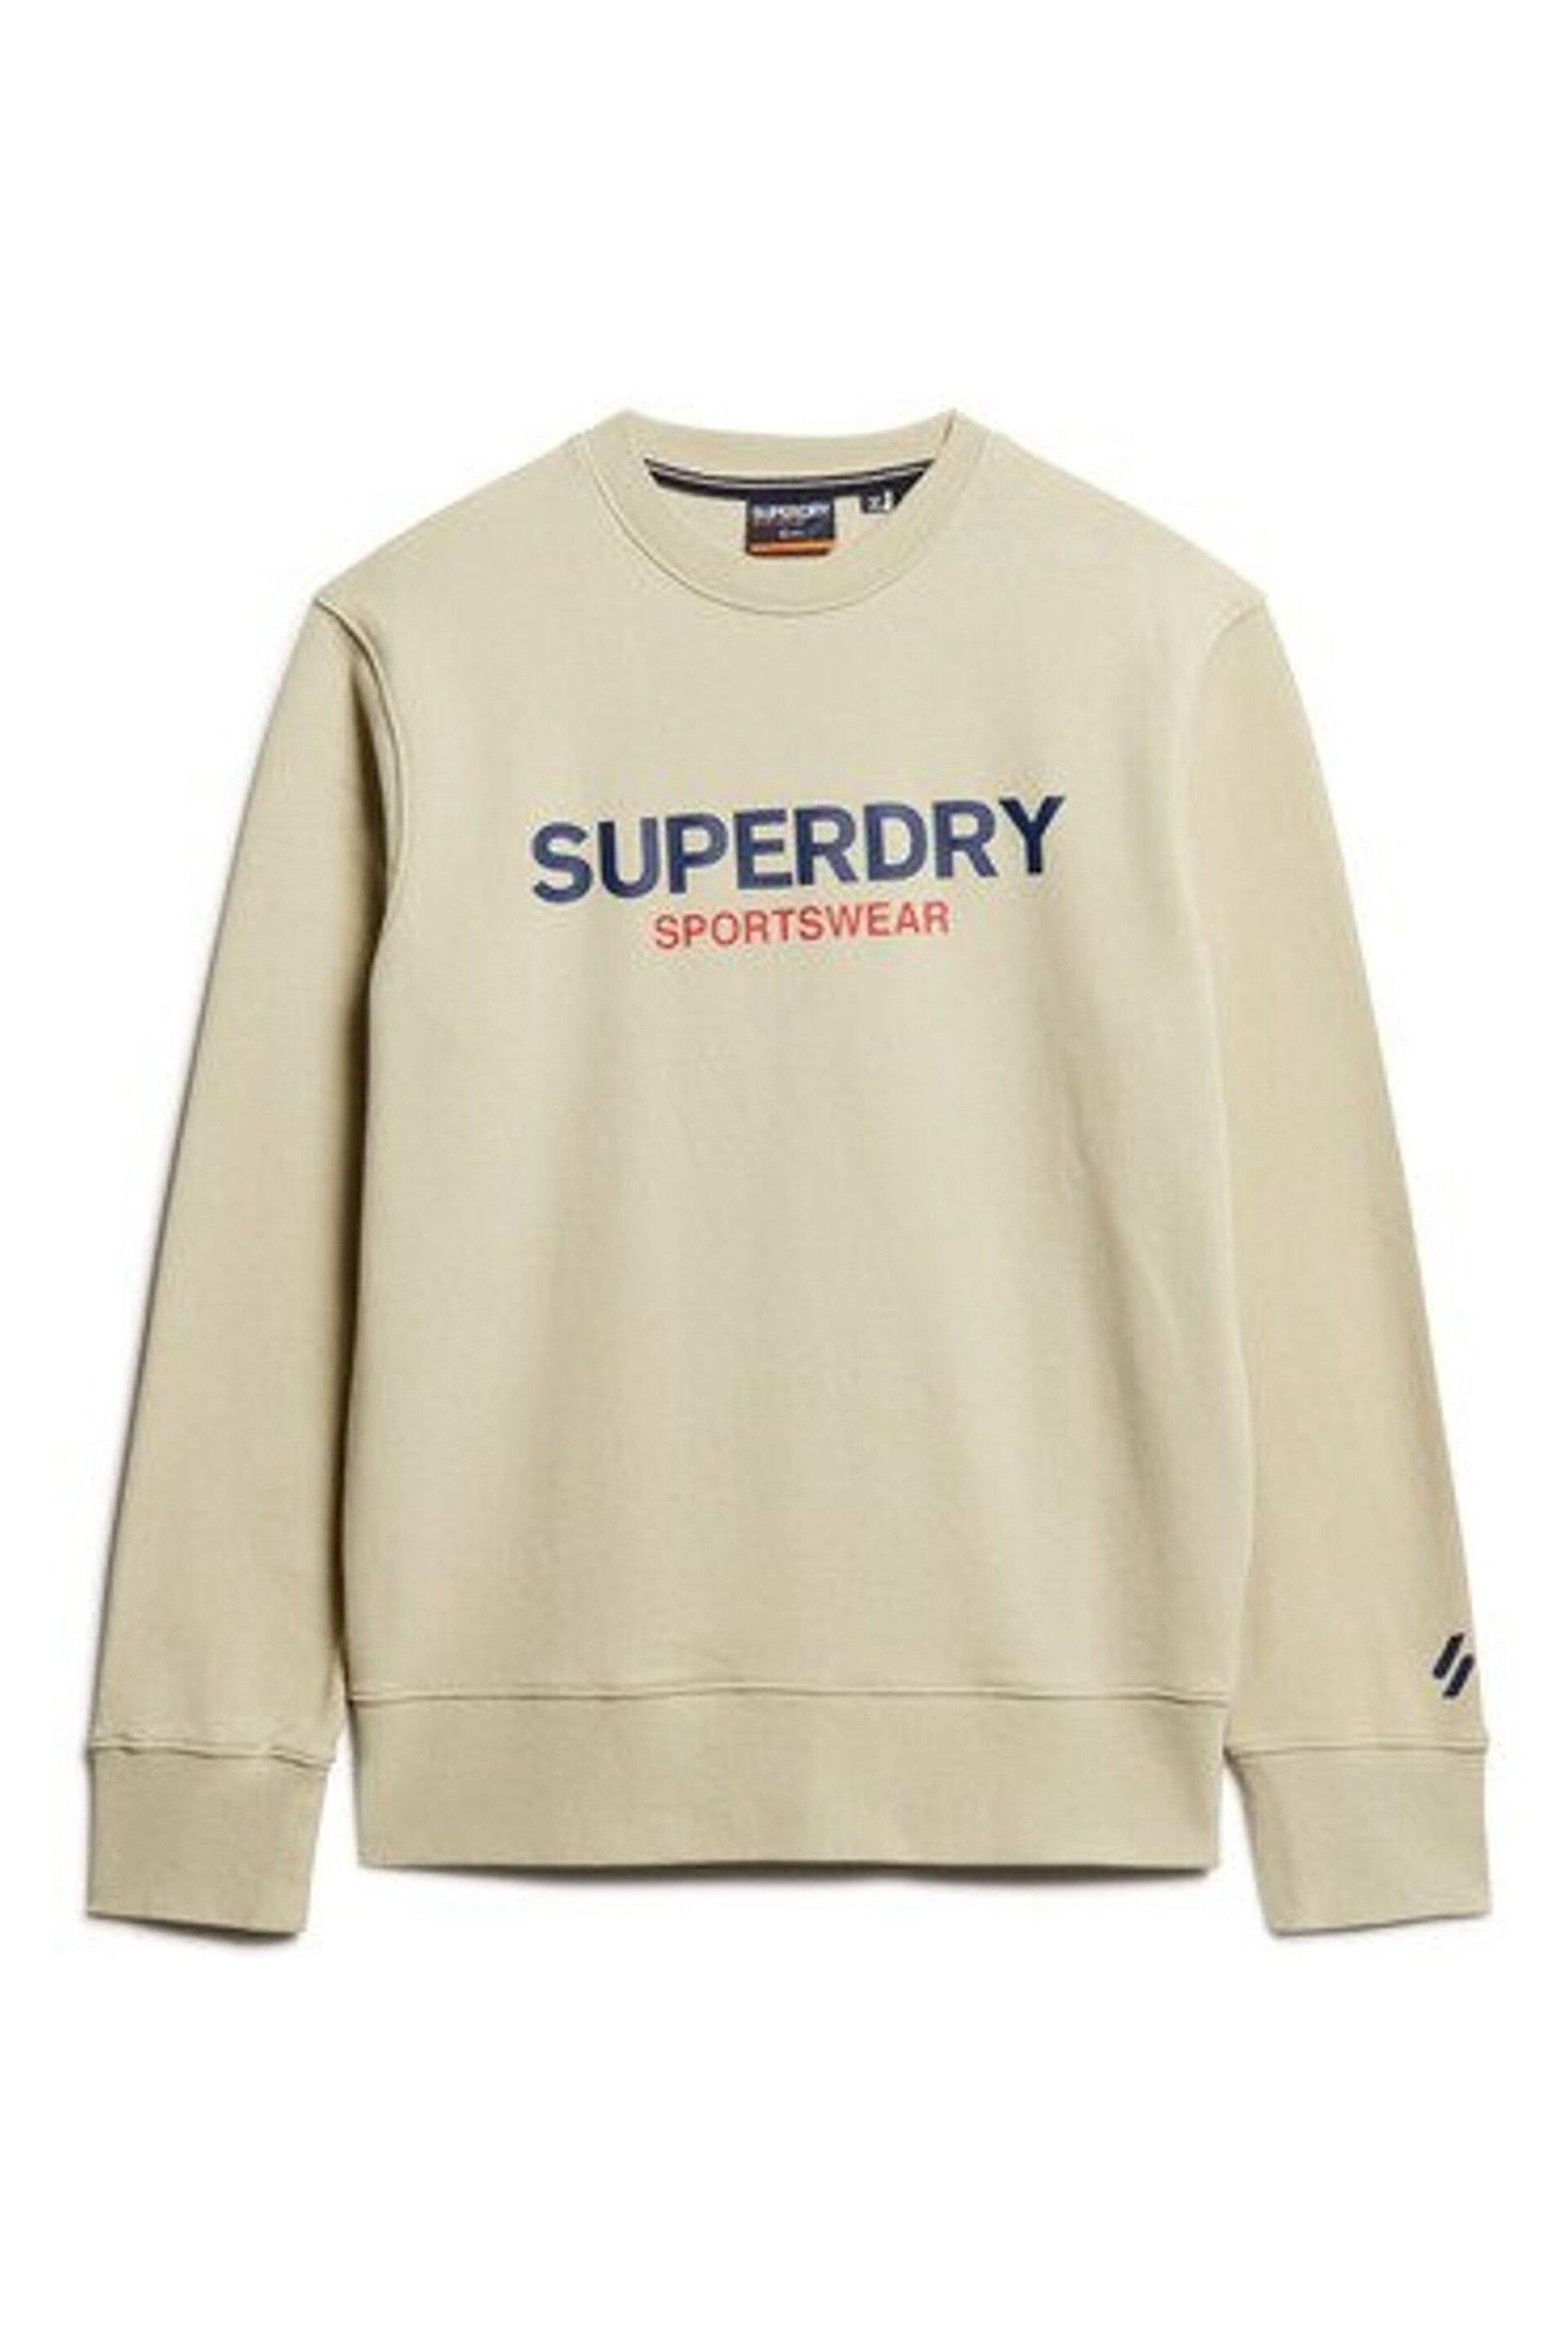 Superdry Brown Sportswear Logo Loose Crew Sweatshirt - Image 4 of 6